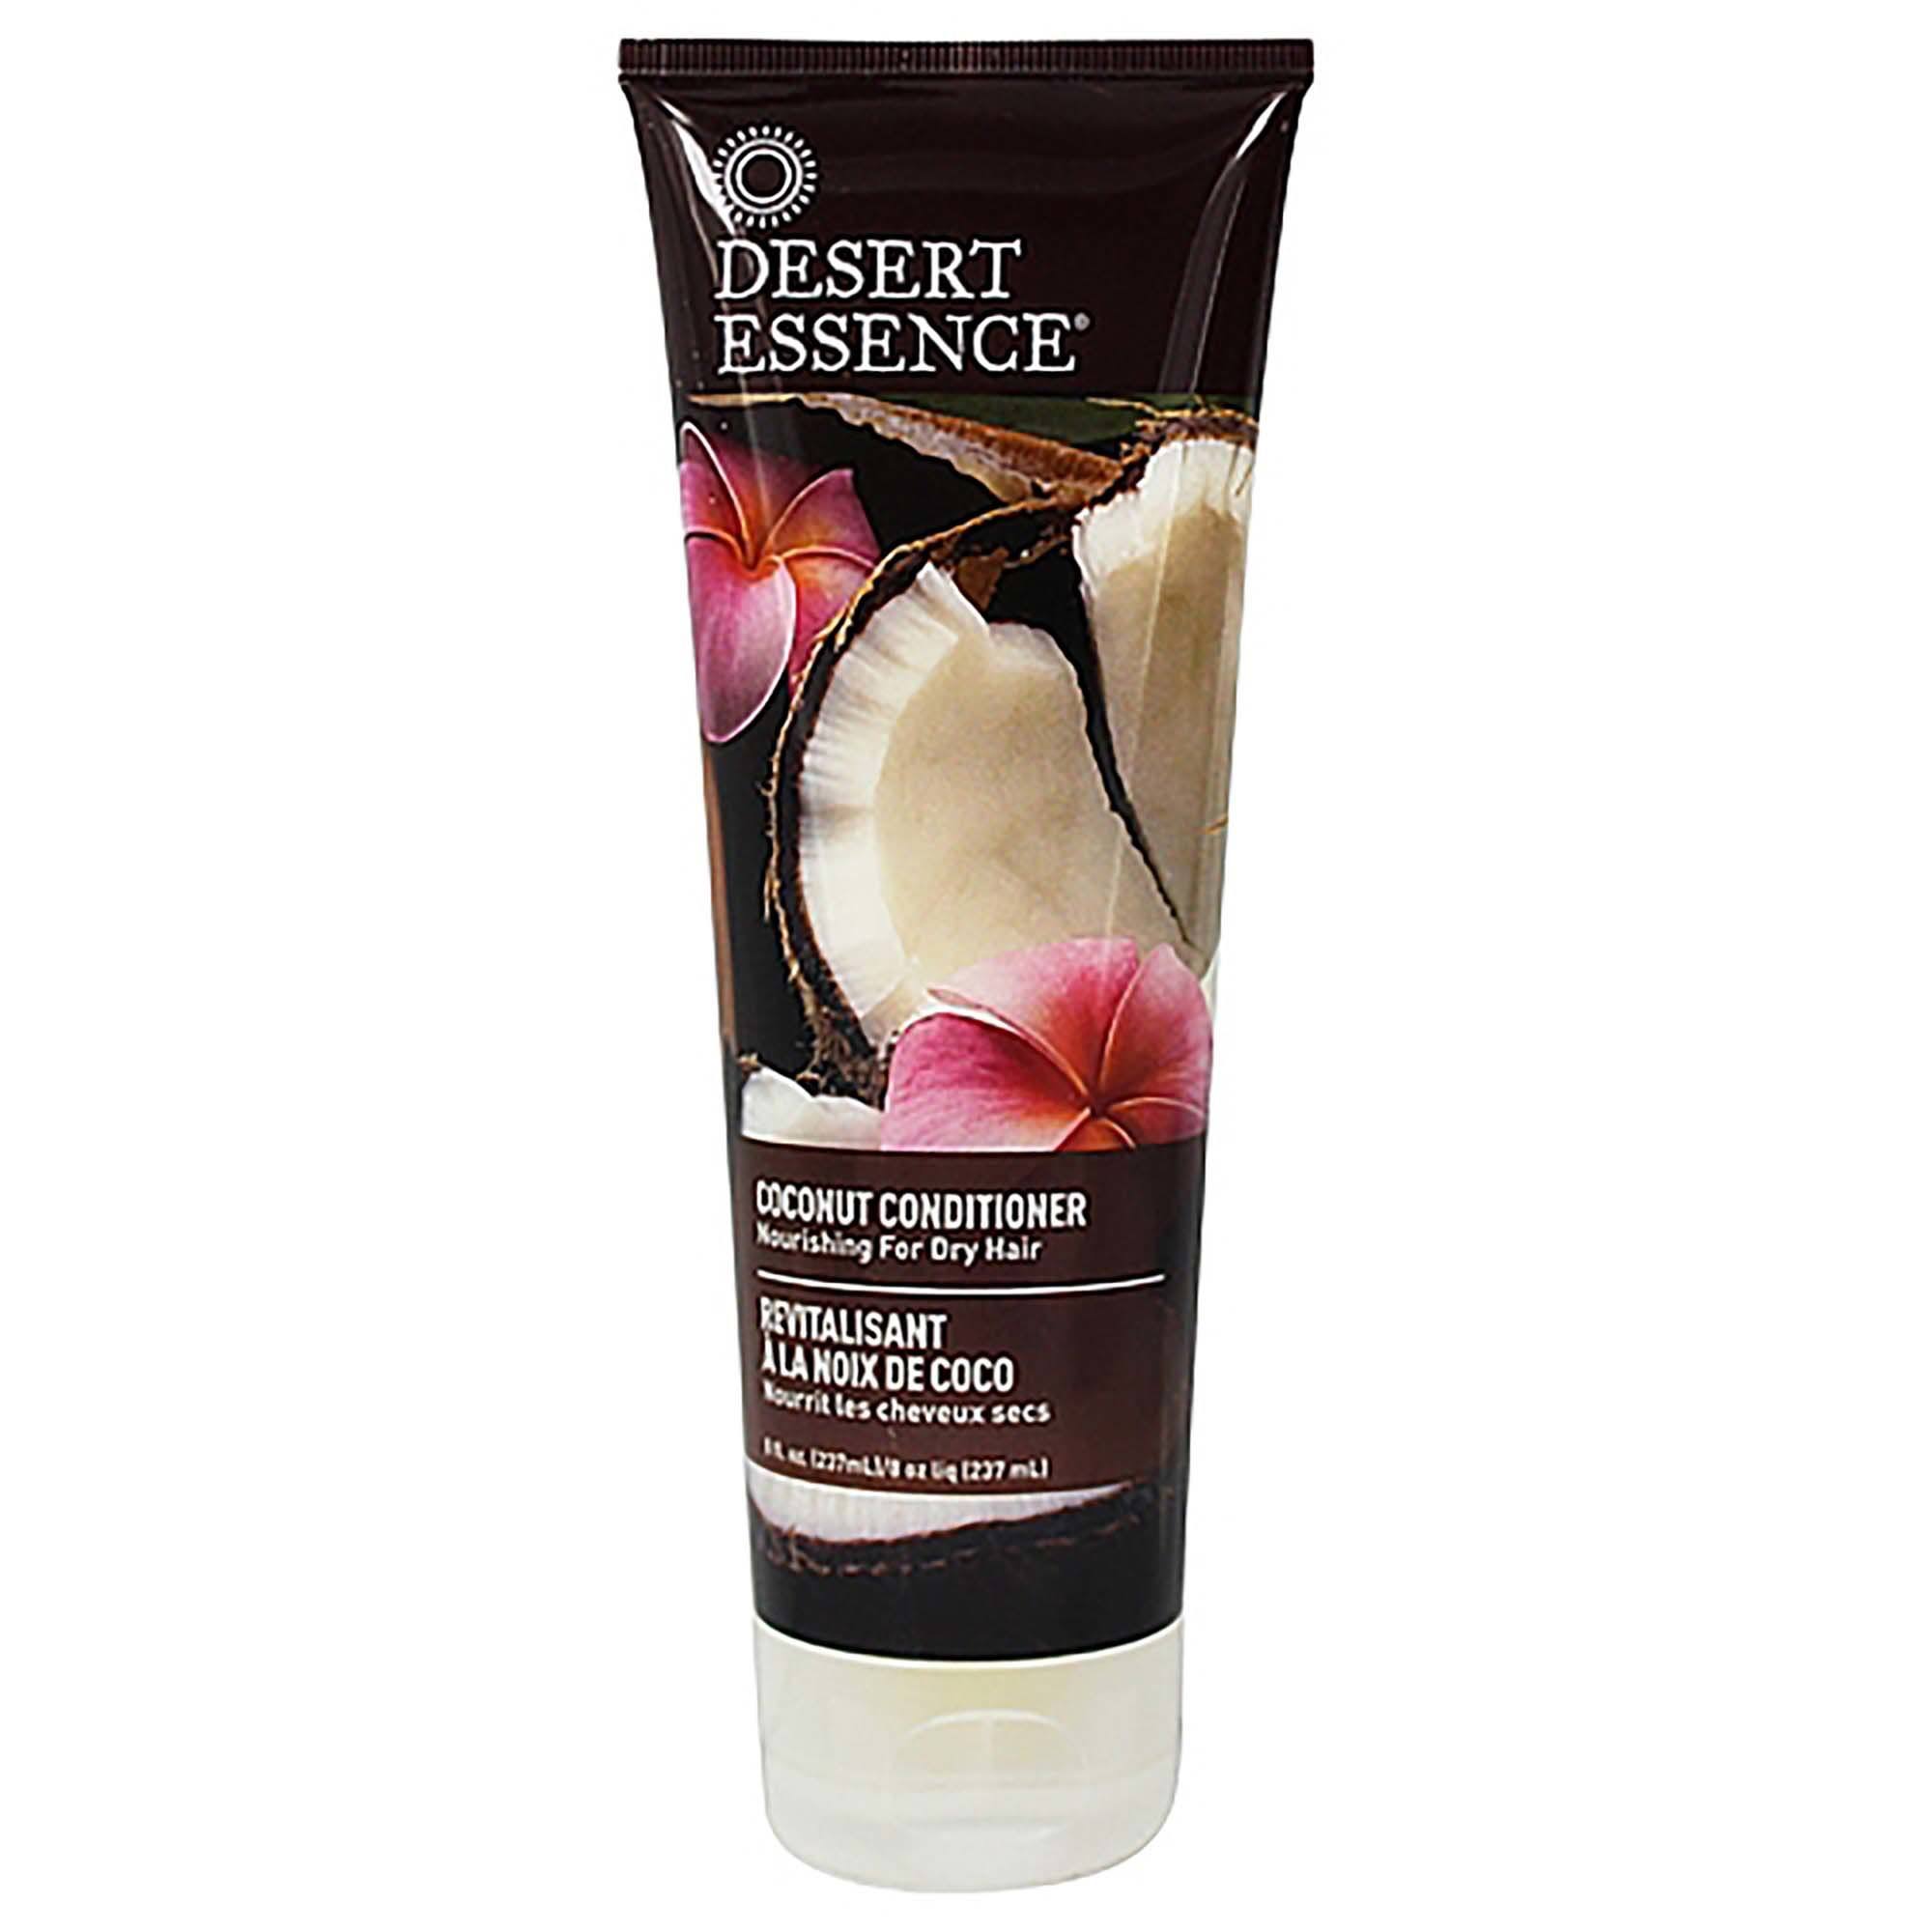 Desert Essence Conditioner Coconut 8 FL oz (237 ml)